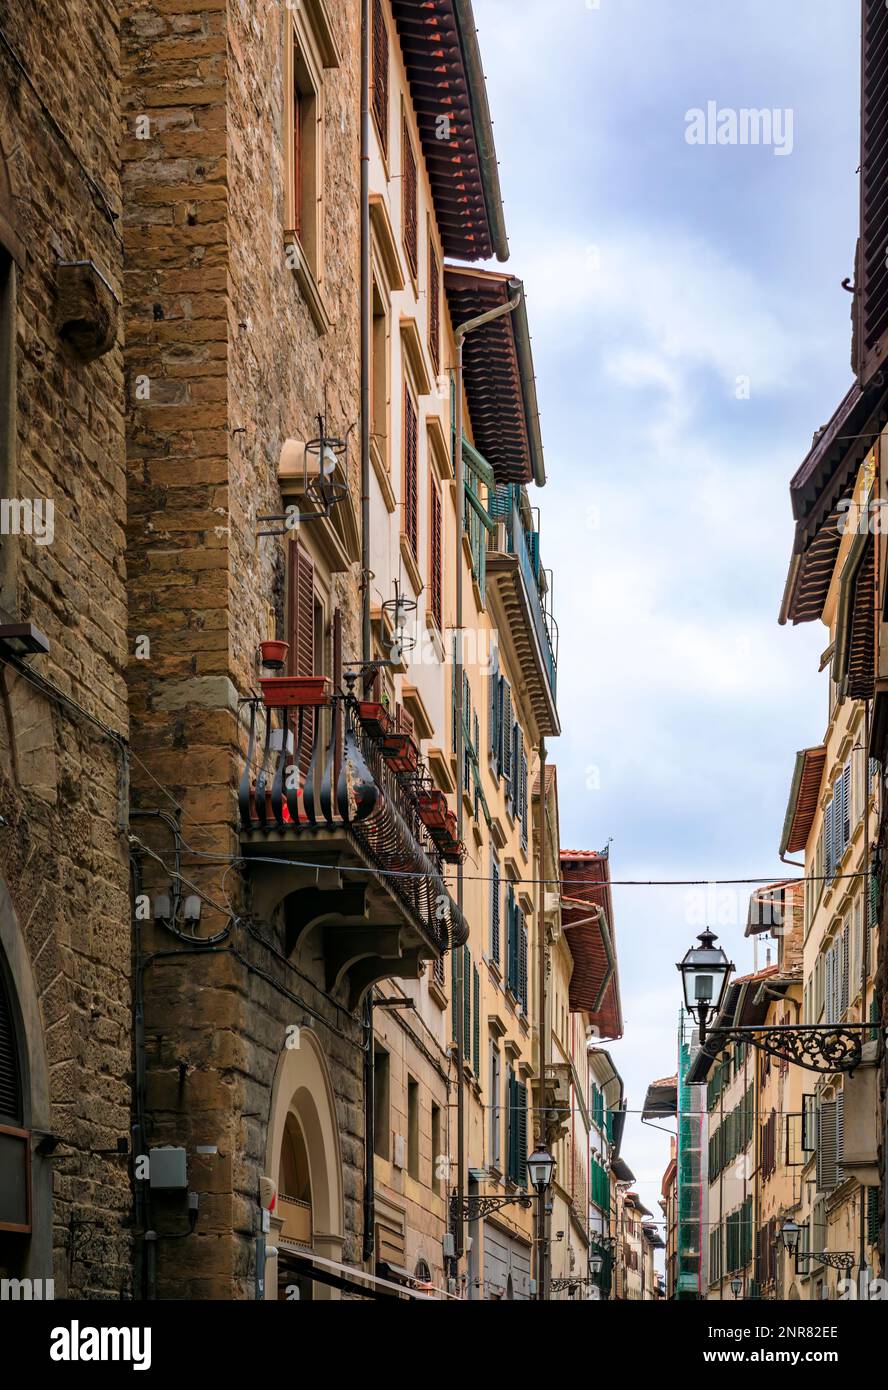 Medieval Renaissance gothic buildings along a narrow street in Oltrarno Santo Spirito area of Centro Storico or Historic Centre of Florence, Italy Stock Photo